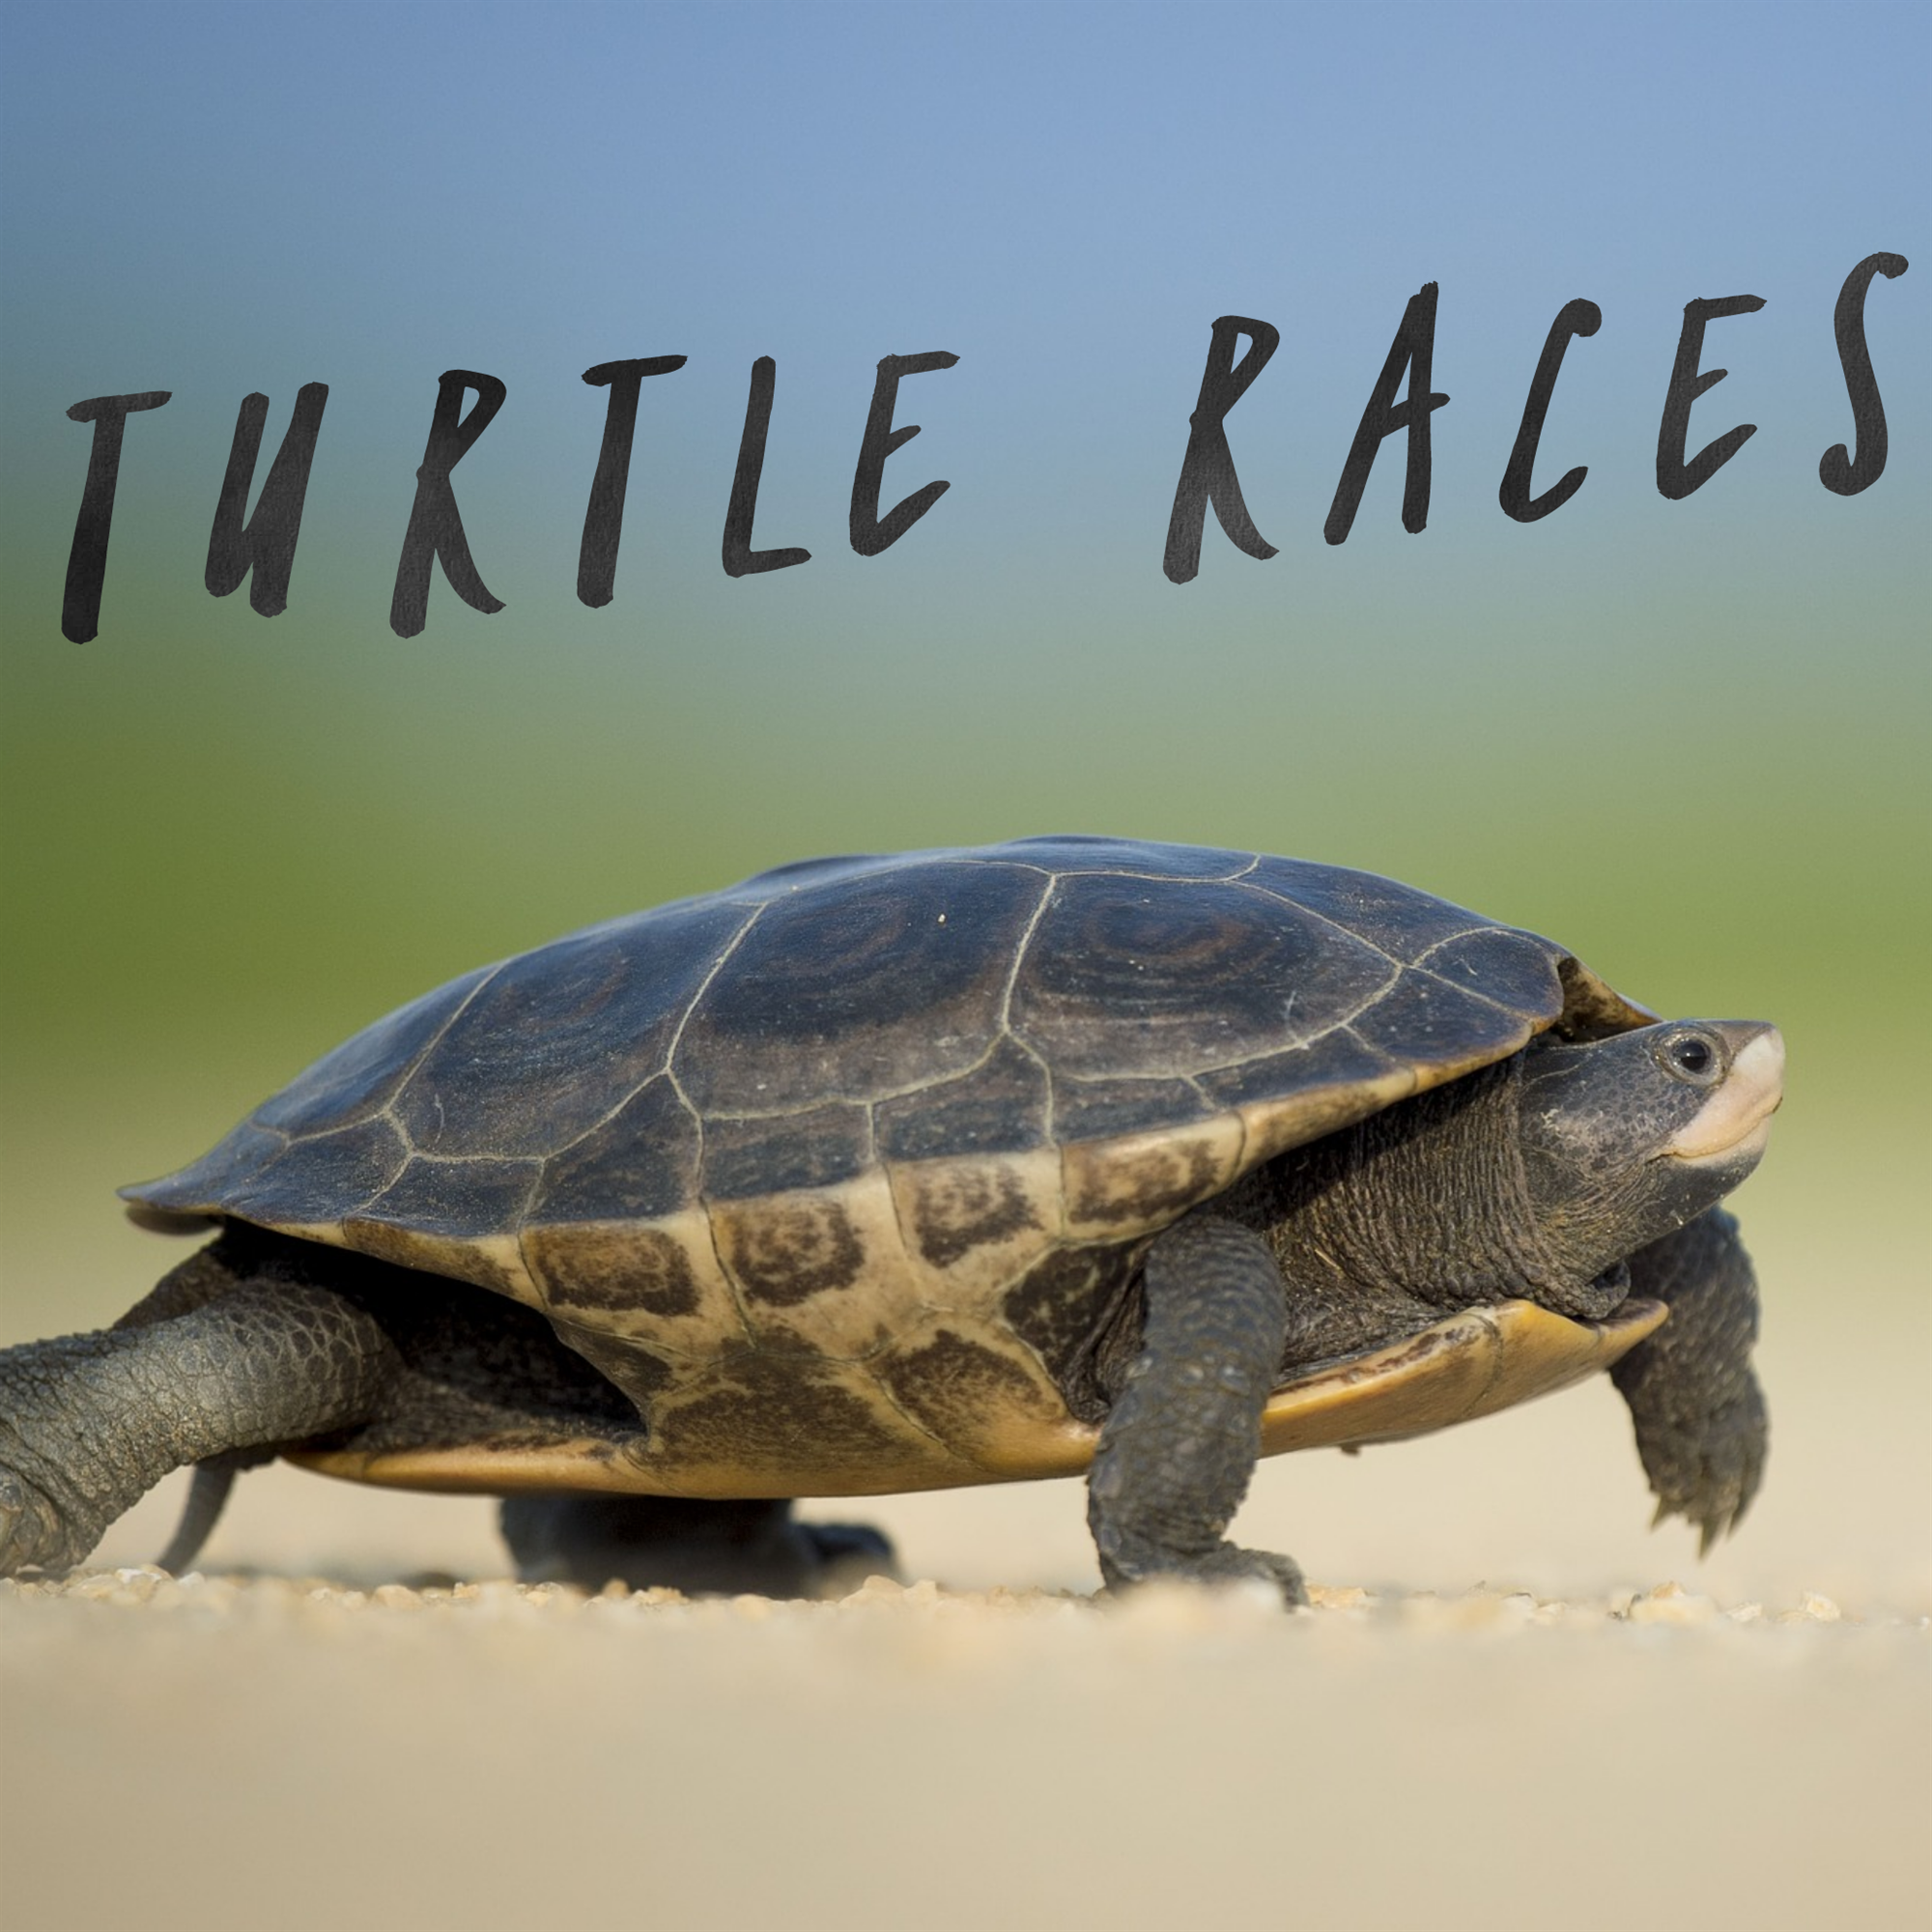 Turtle Races